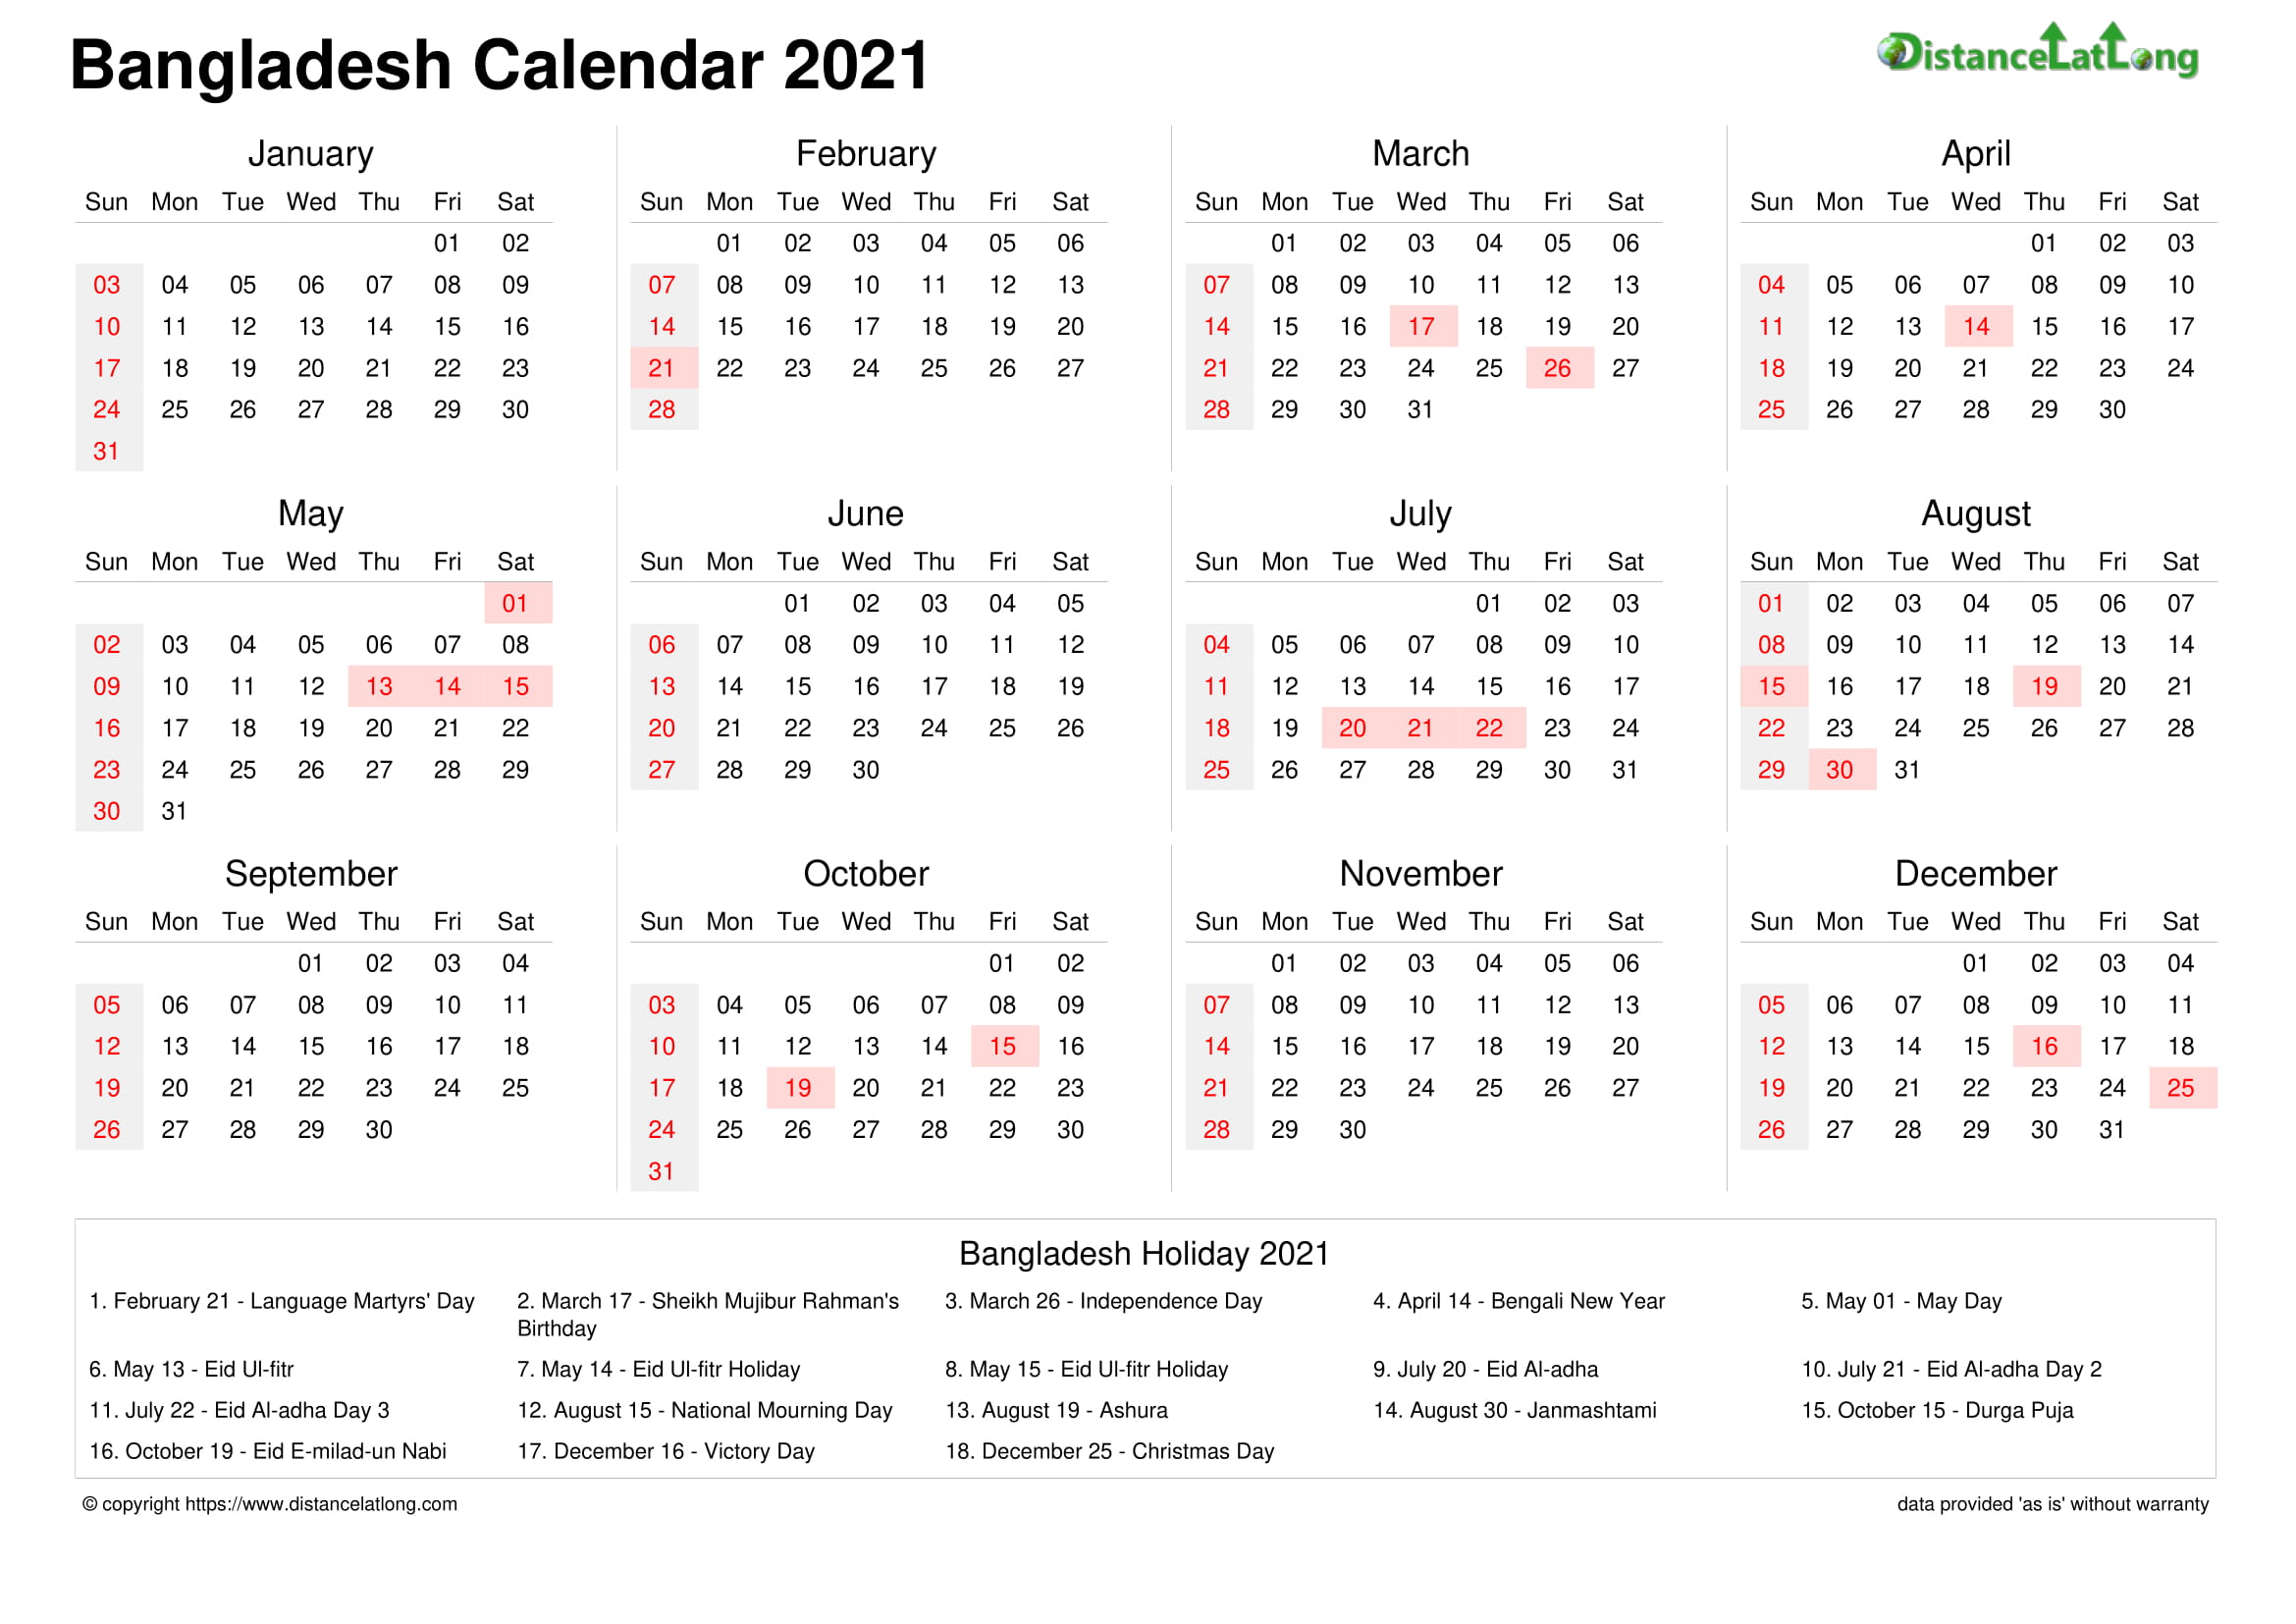 Bangladesh Holiday Calendar 2021 Jpg Templates Distancelatlong Com1